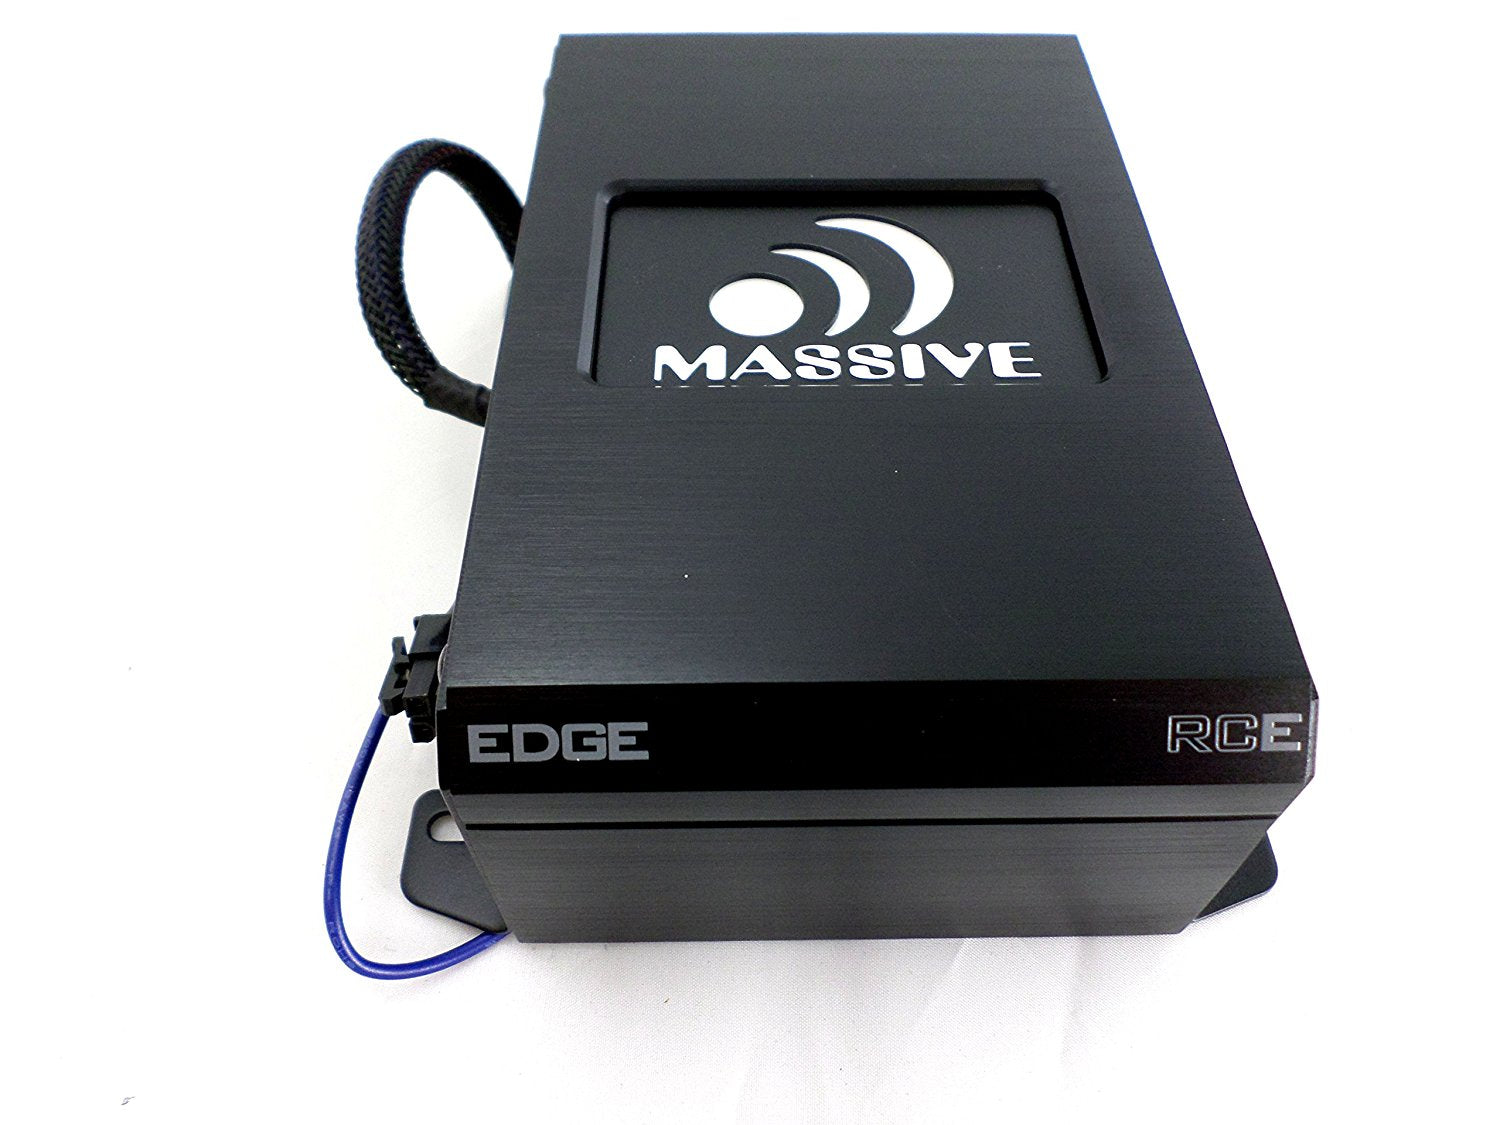 Massive Audio EX2 Nano Edge Series Amp (2 Channels, 120 Watts RMS x 2 at 4 Ohms, Class AB)